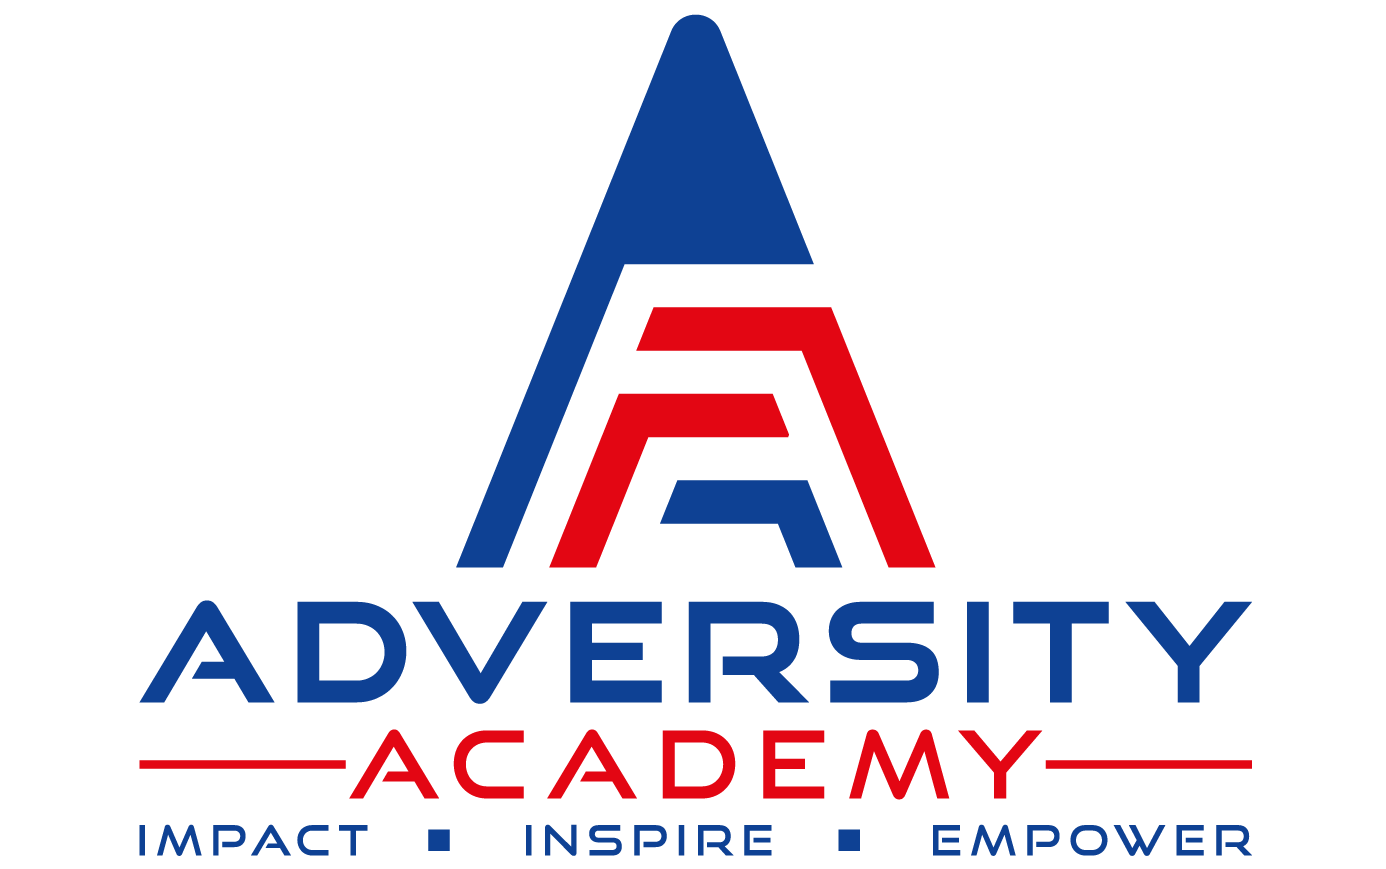 The Adversity Academy